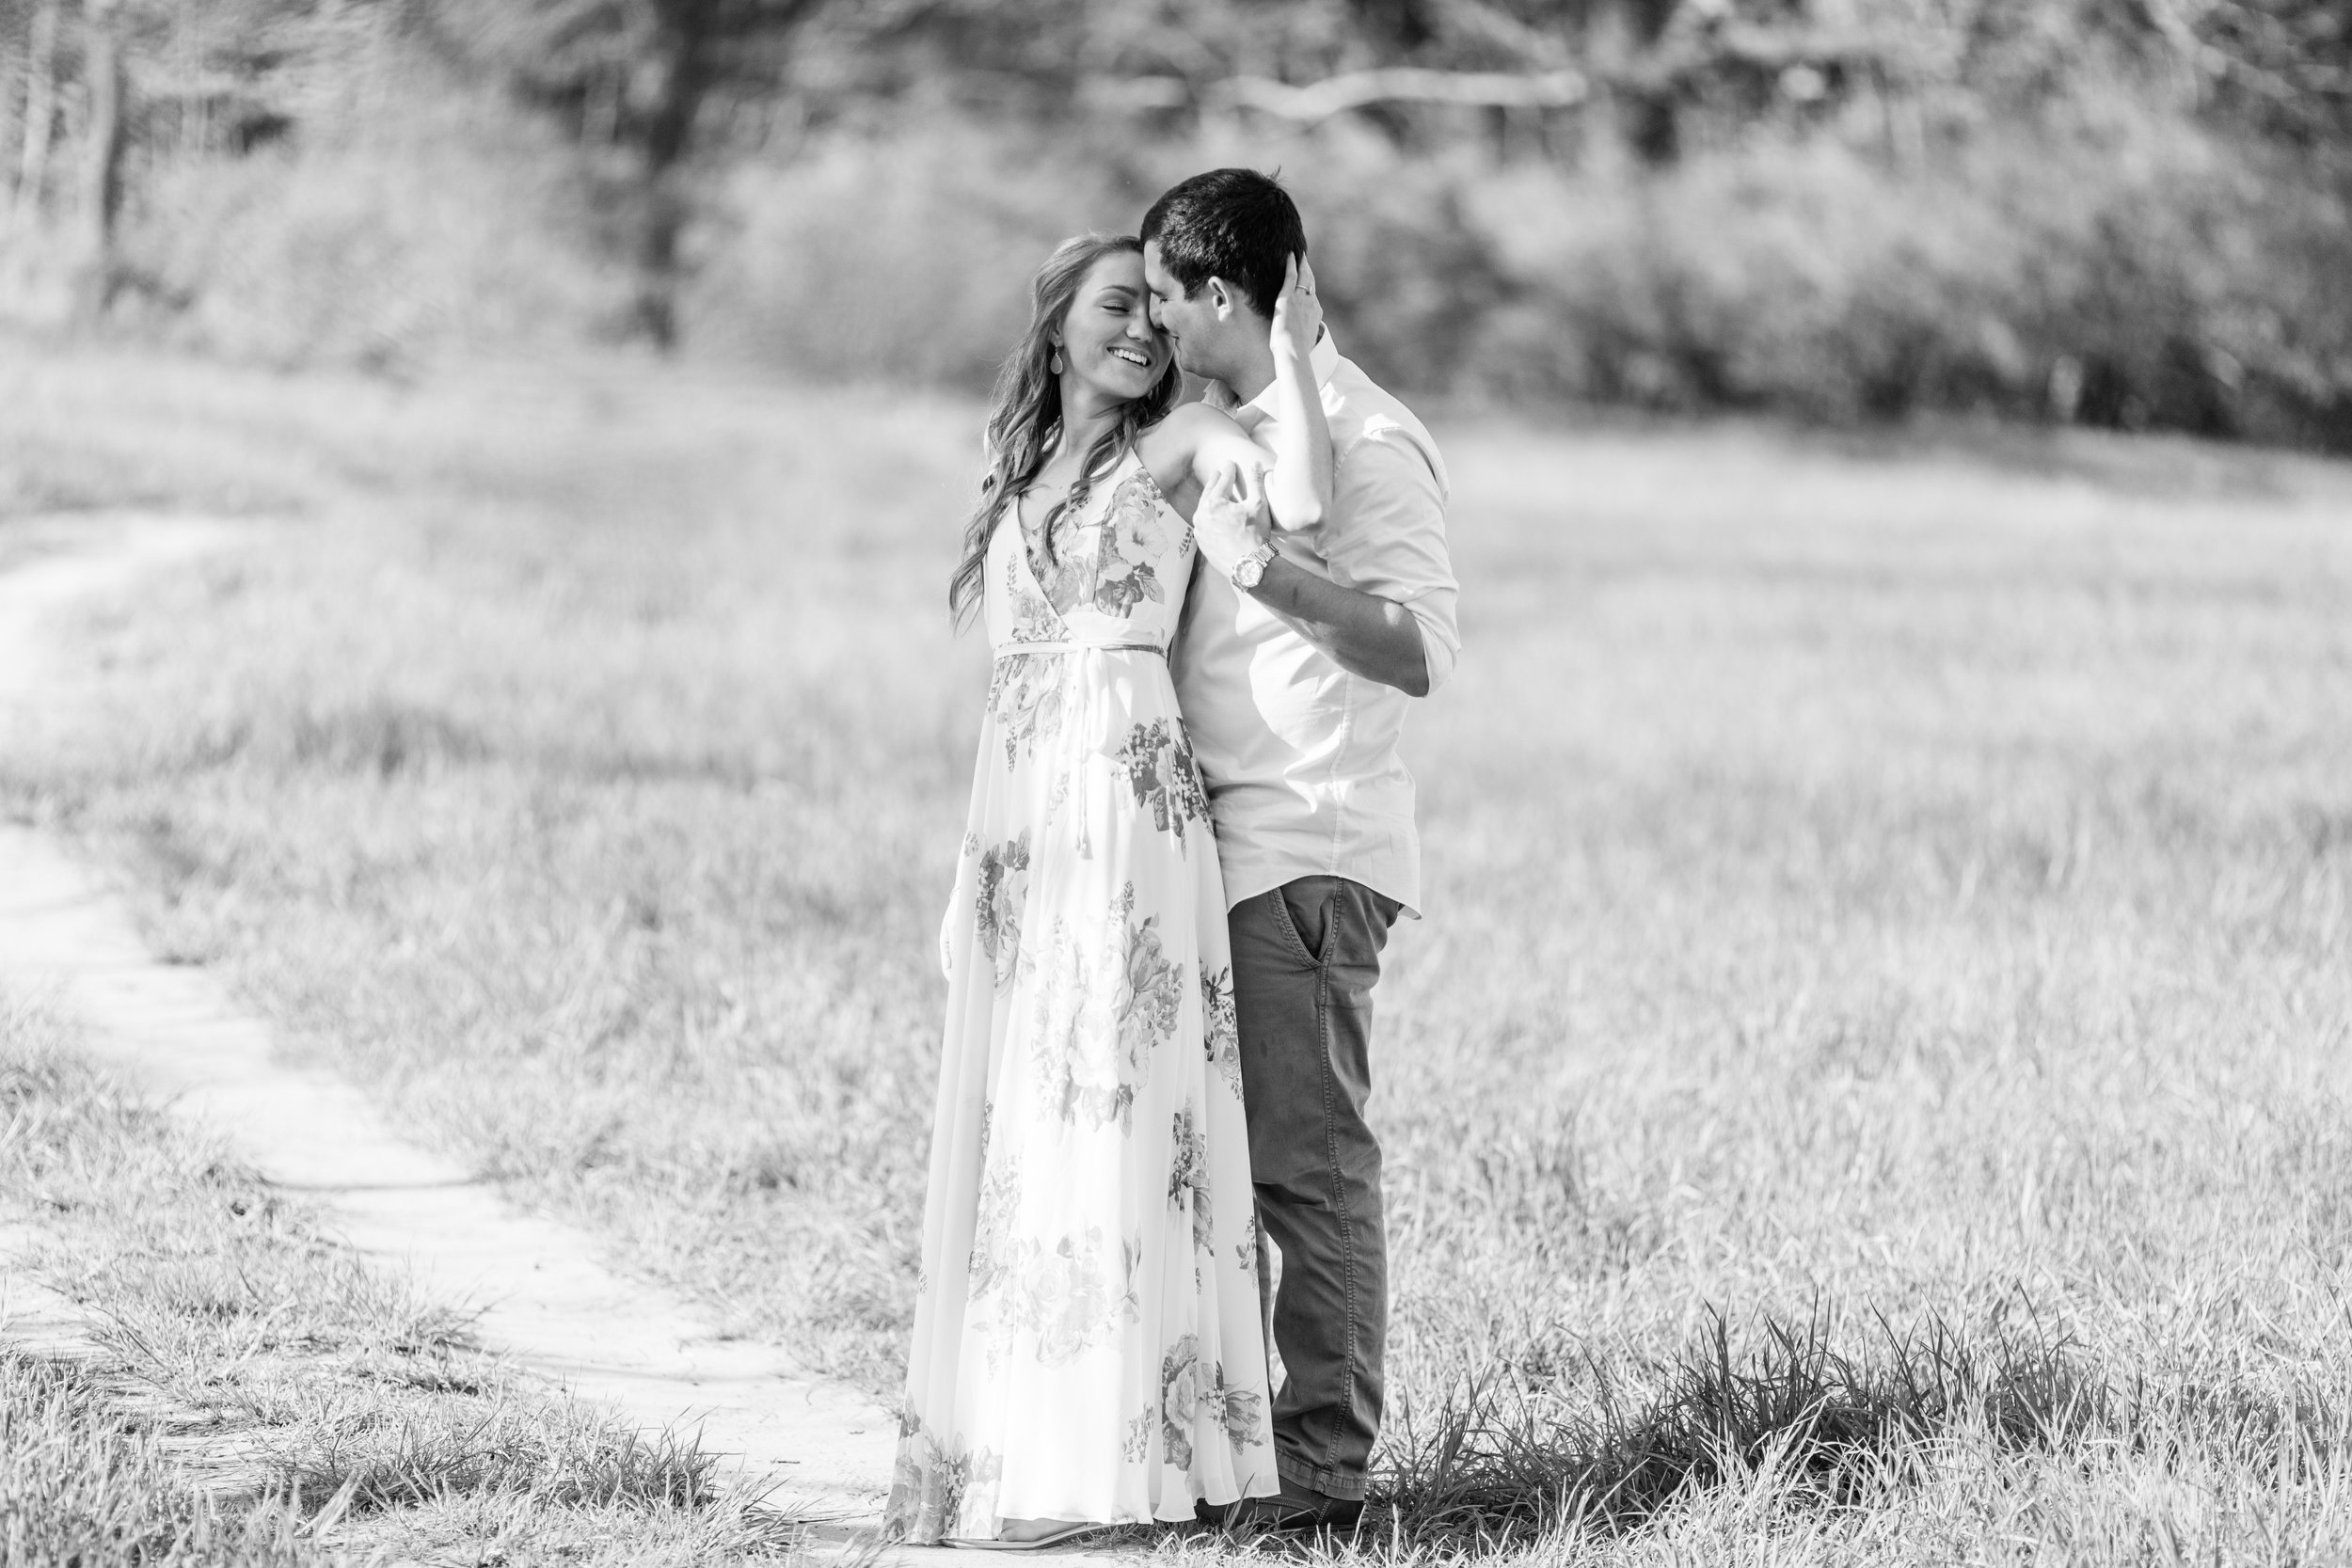 Gorgeous Garden Engagement Photos - The Overwhelmed Bride Wedding Blog